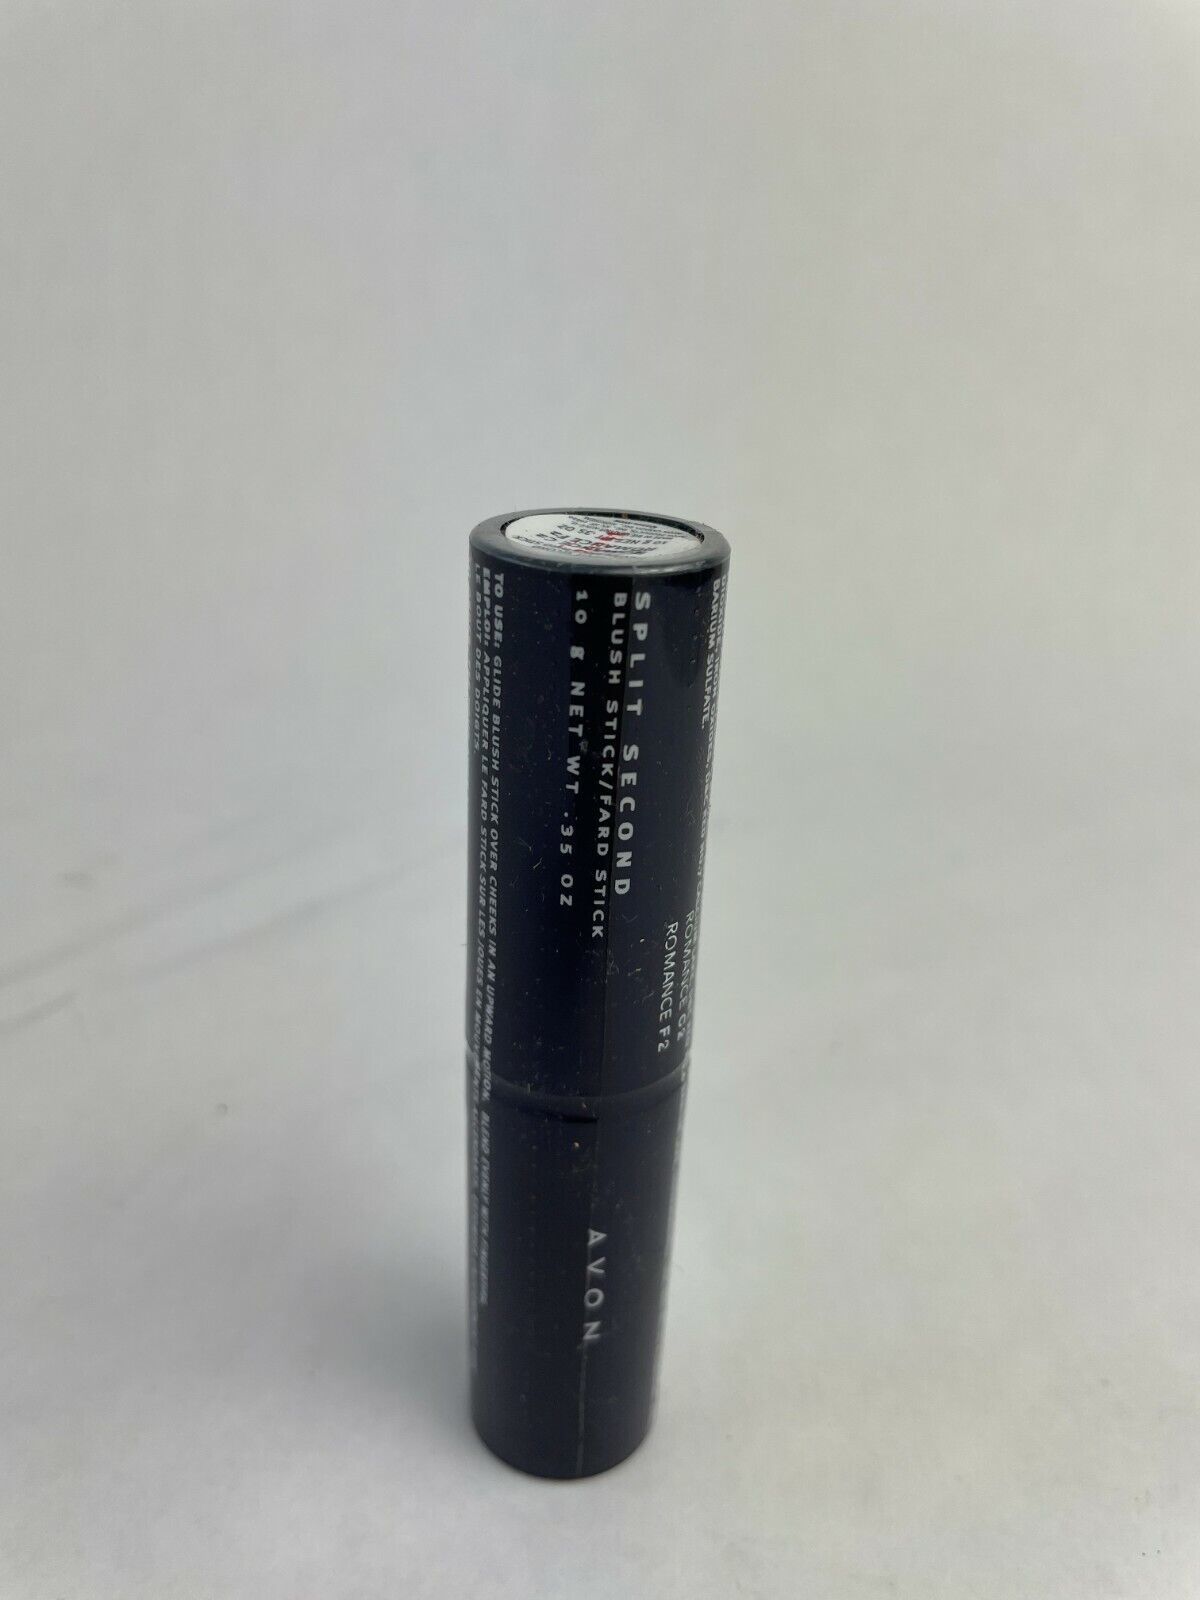 Primary image for Avon Split Second Blush Stick Fard Stick 10g Q1